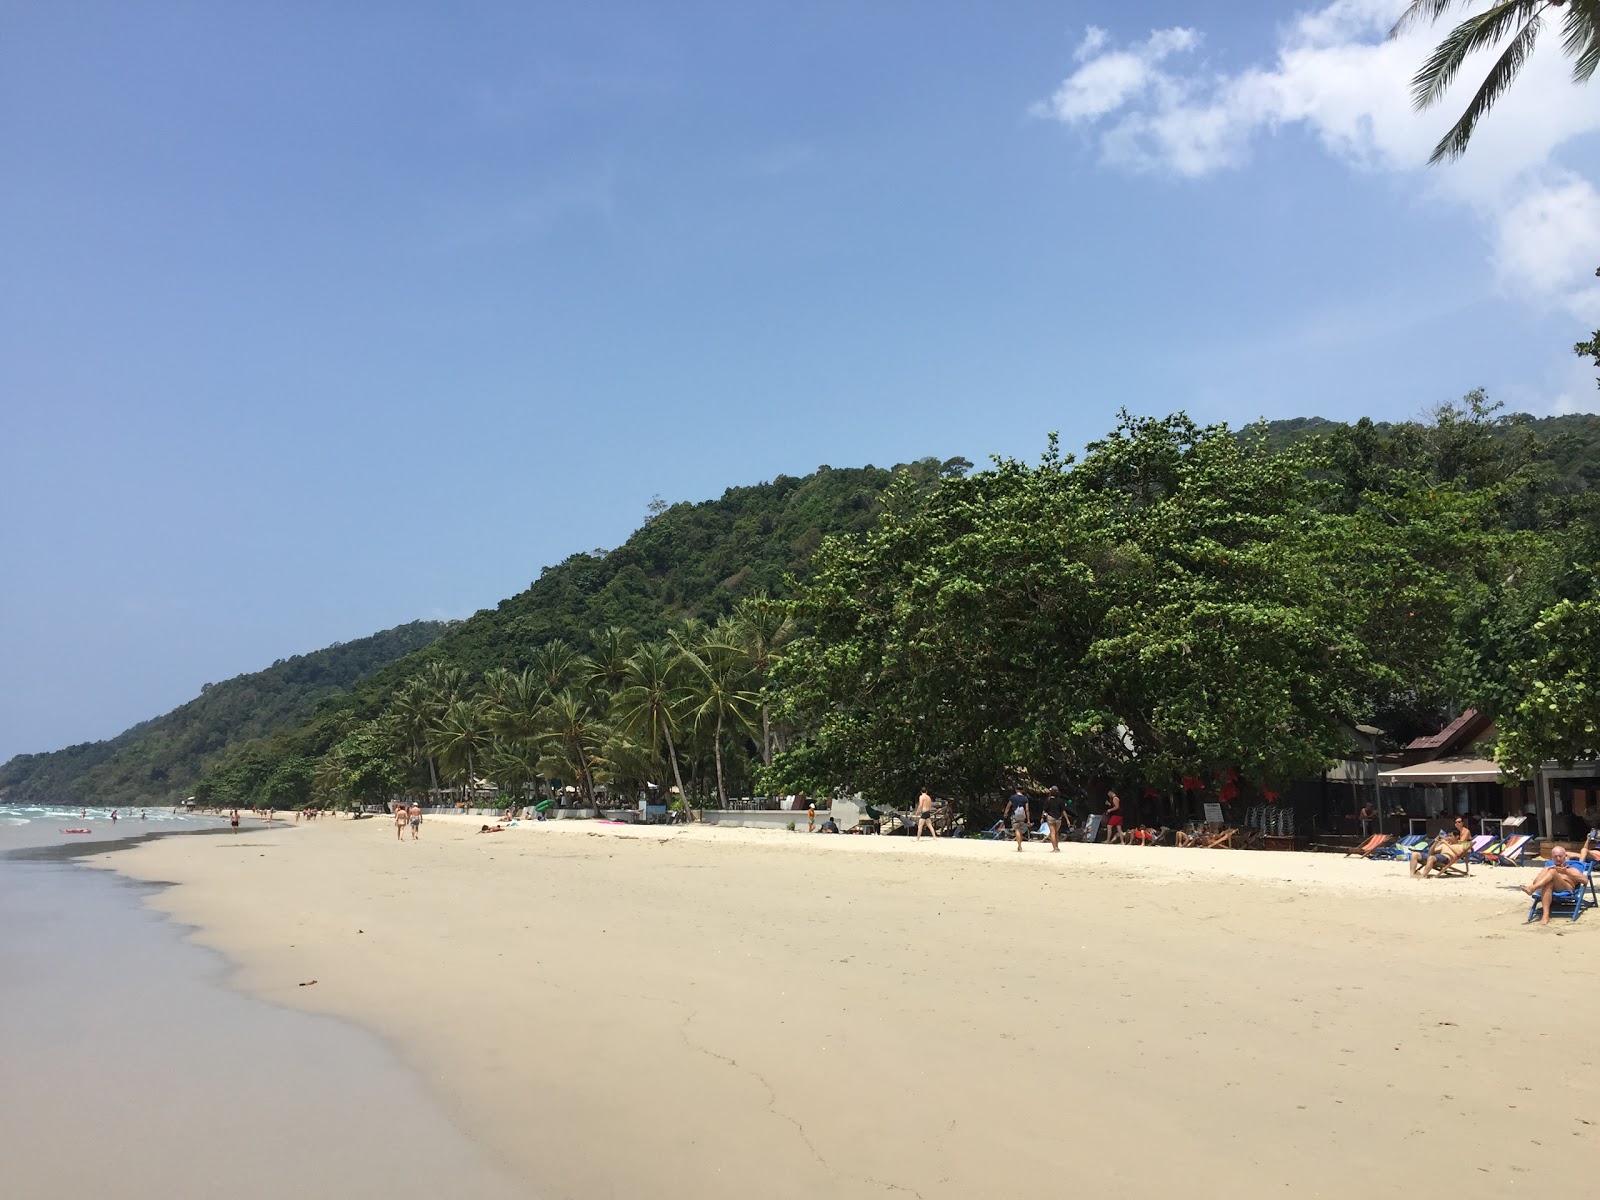 Fotografie cu White Sand beach - locul popular printre cunoscătorii de relaxare